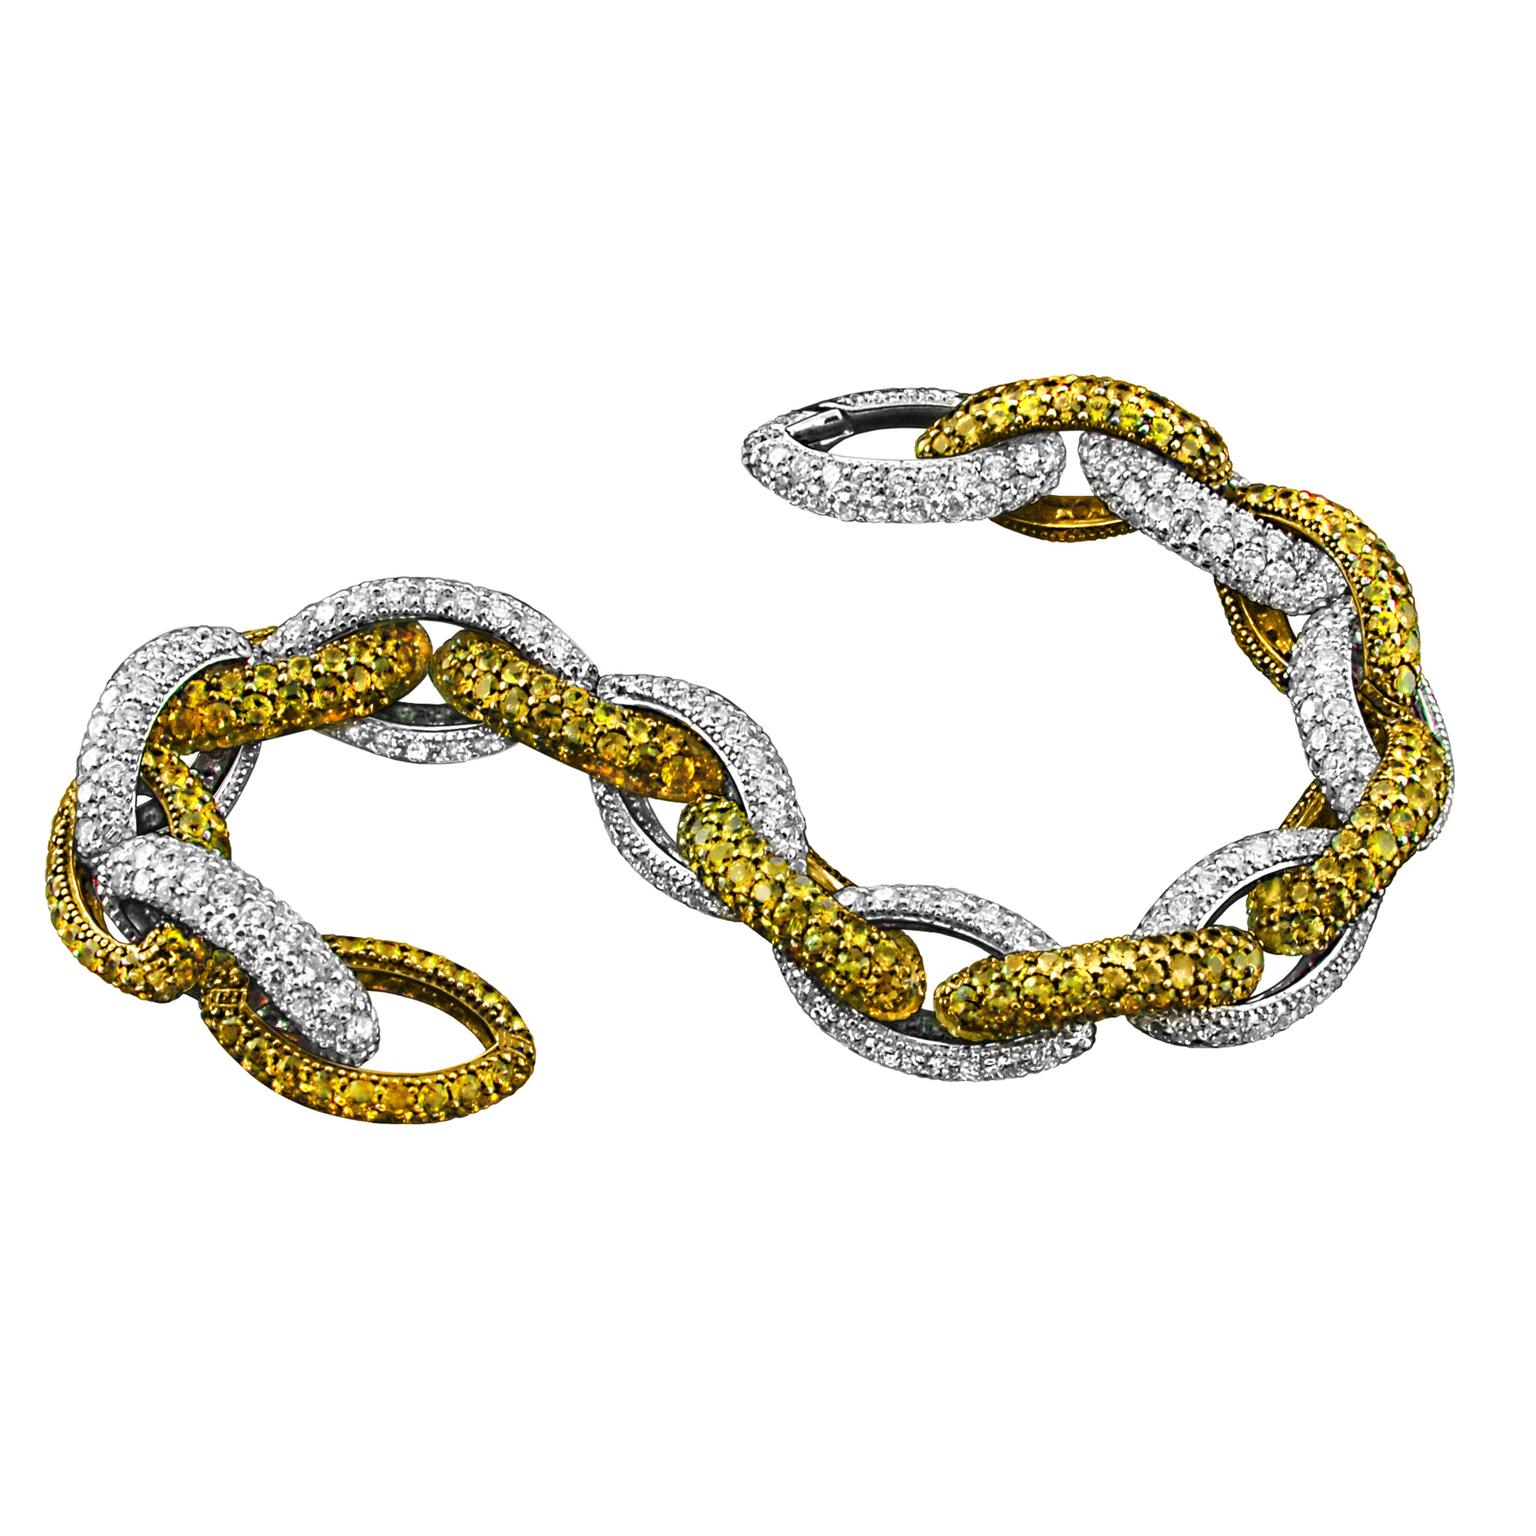 Avakian yellow sapphire Links bracelet